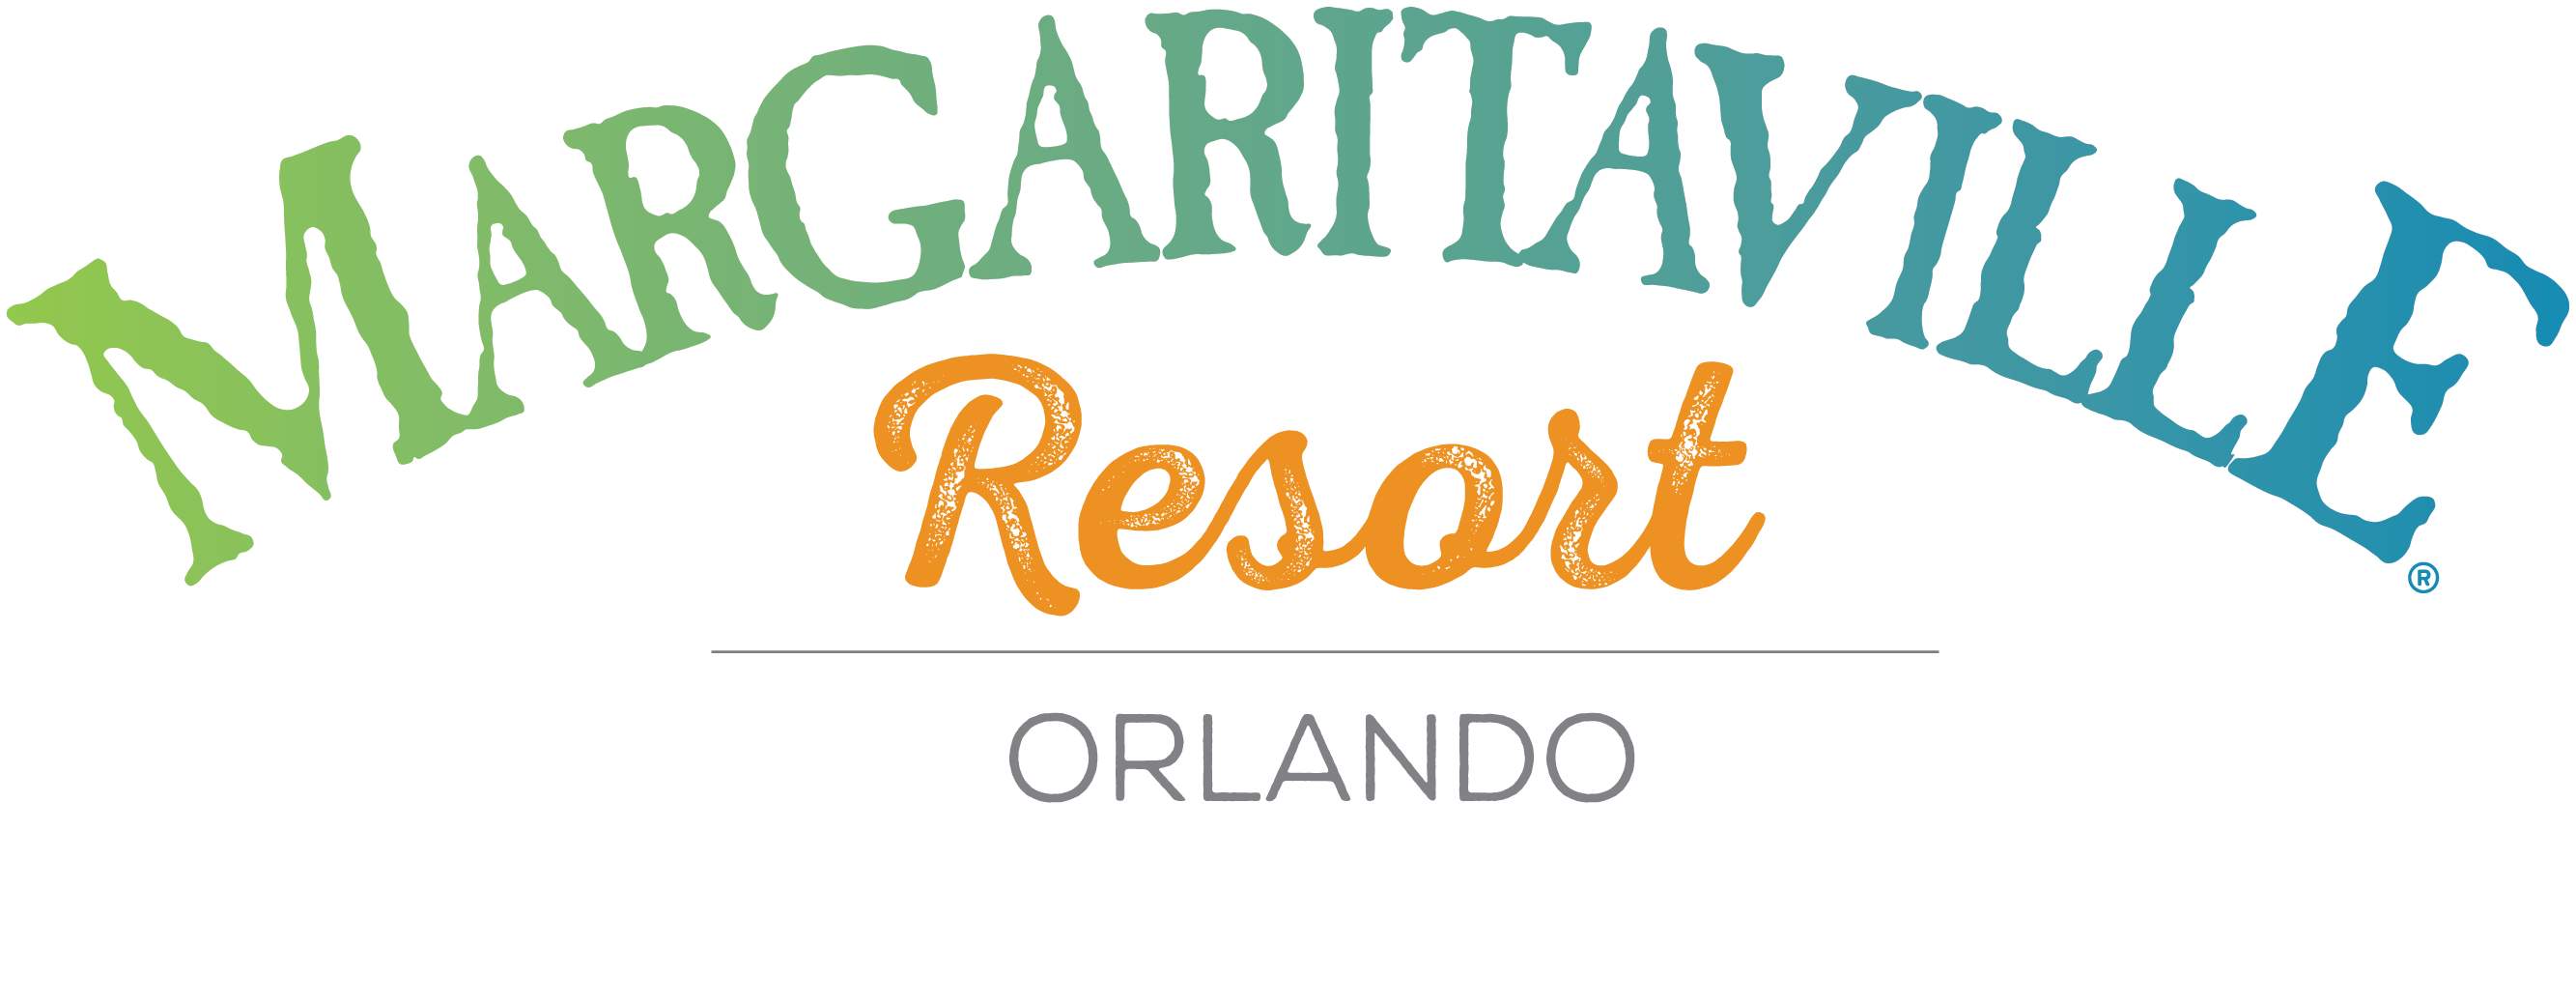 Margaritaville Resort Orlando logo